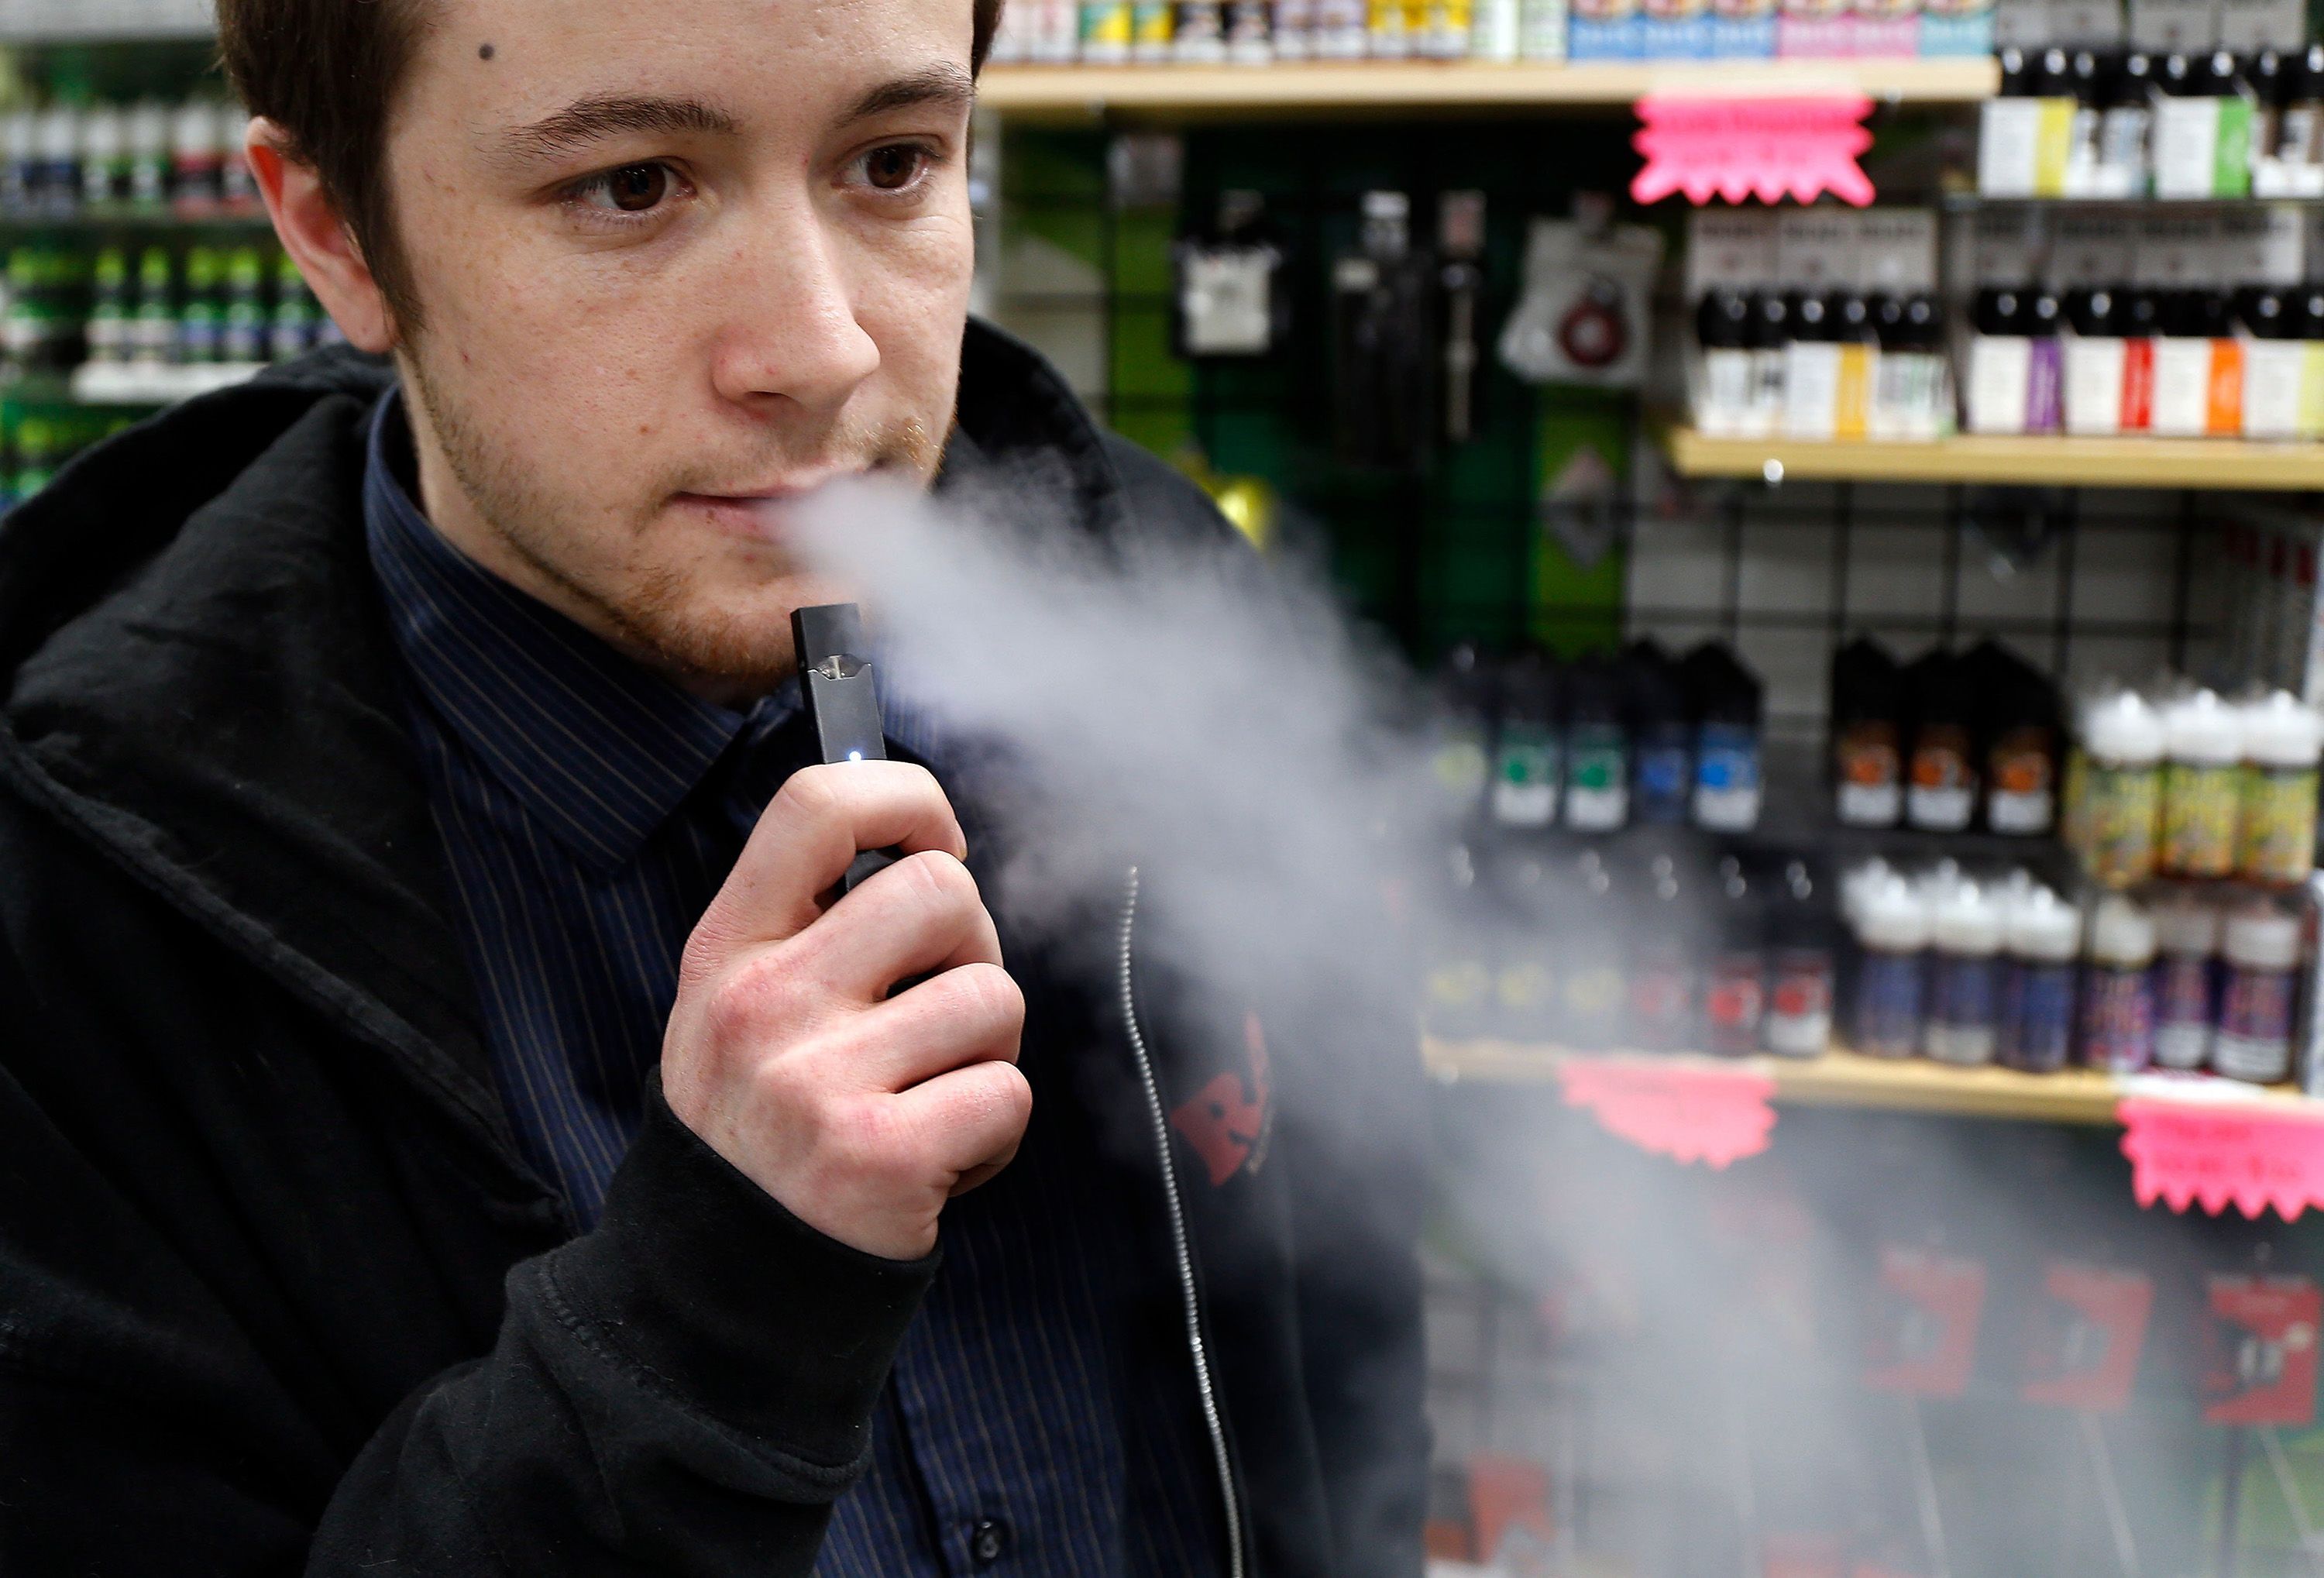 FDA to implement 10-month deadline for e-cigarette applications